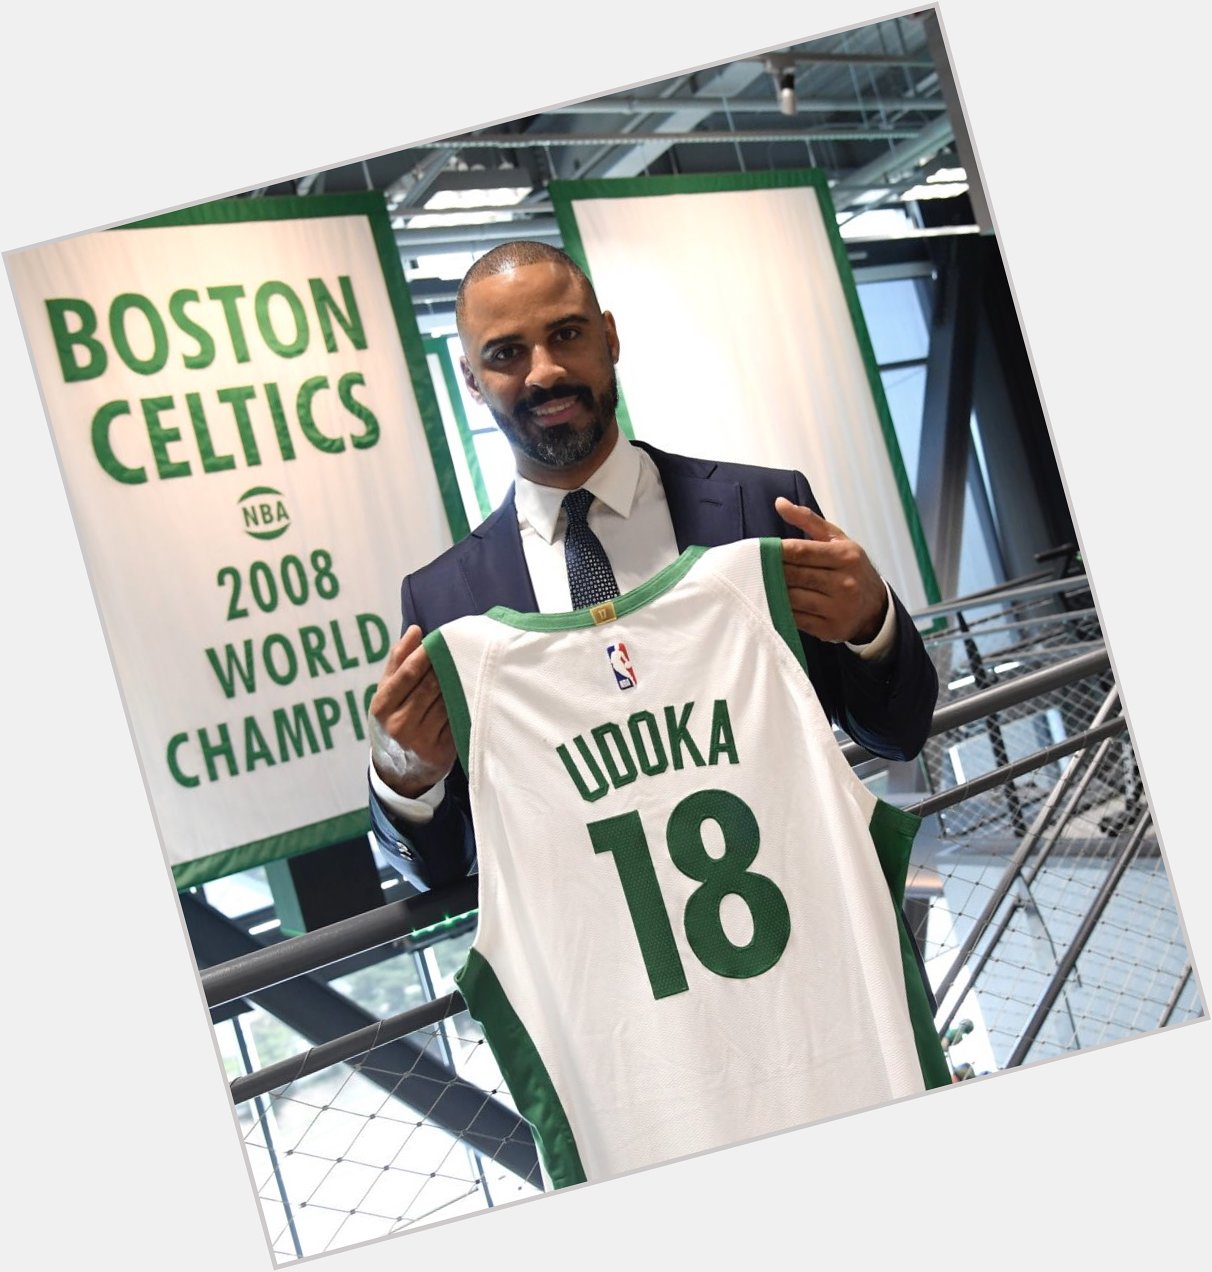 Happy birthday to the Celtics gold medal-winning head coach, Ime Udoka! Hopefully a championship ring is next   